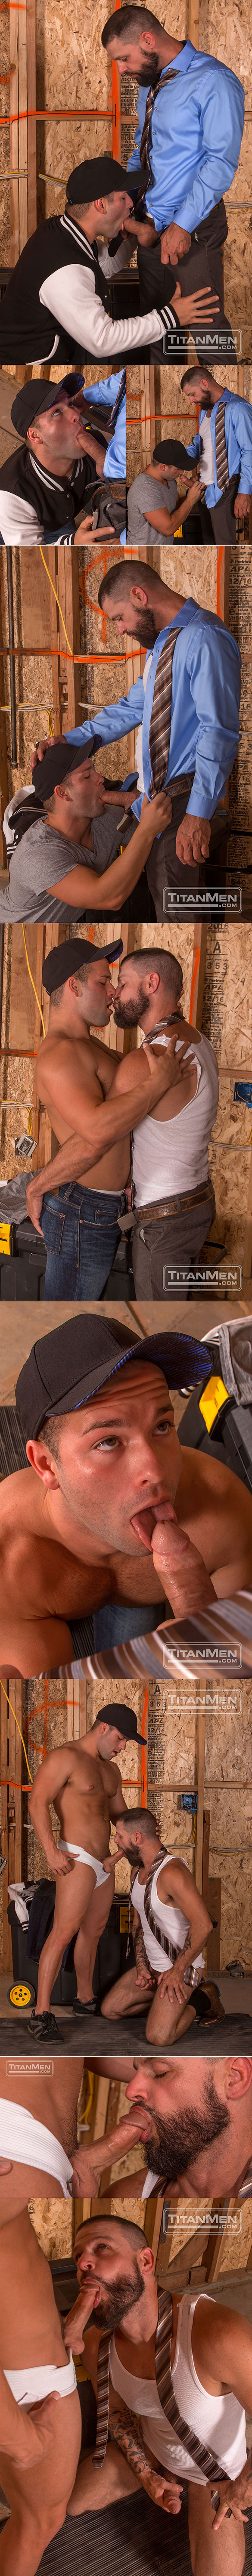 TitanMen: Luke Adams takes Tex Davidson's 9-inch cock up his bubble butt in "West Texas Park & Ride"